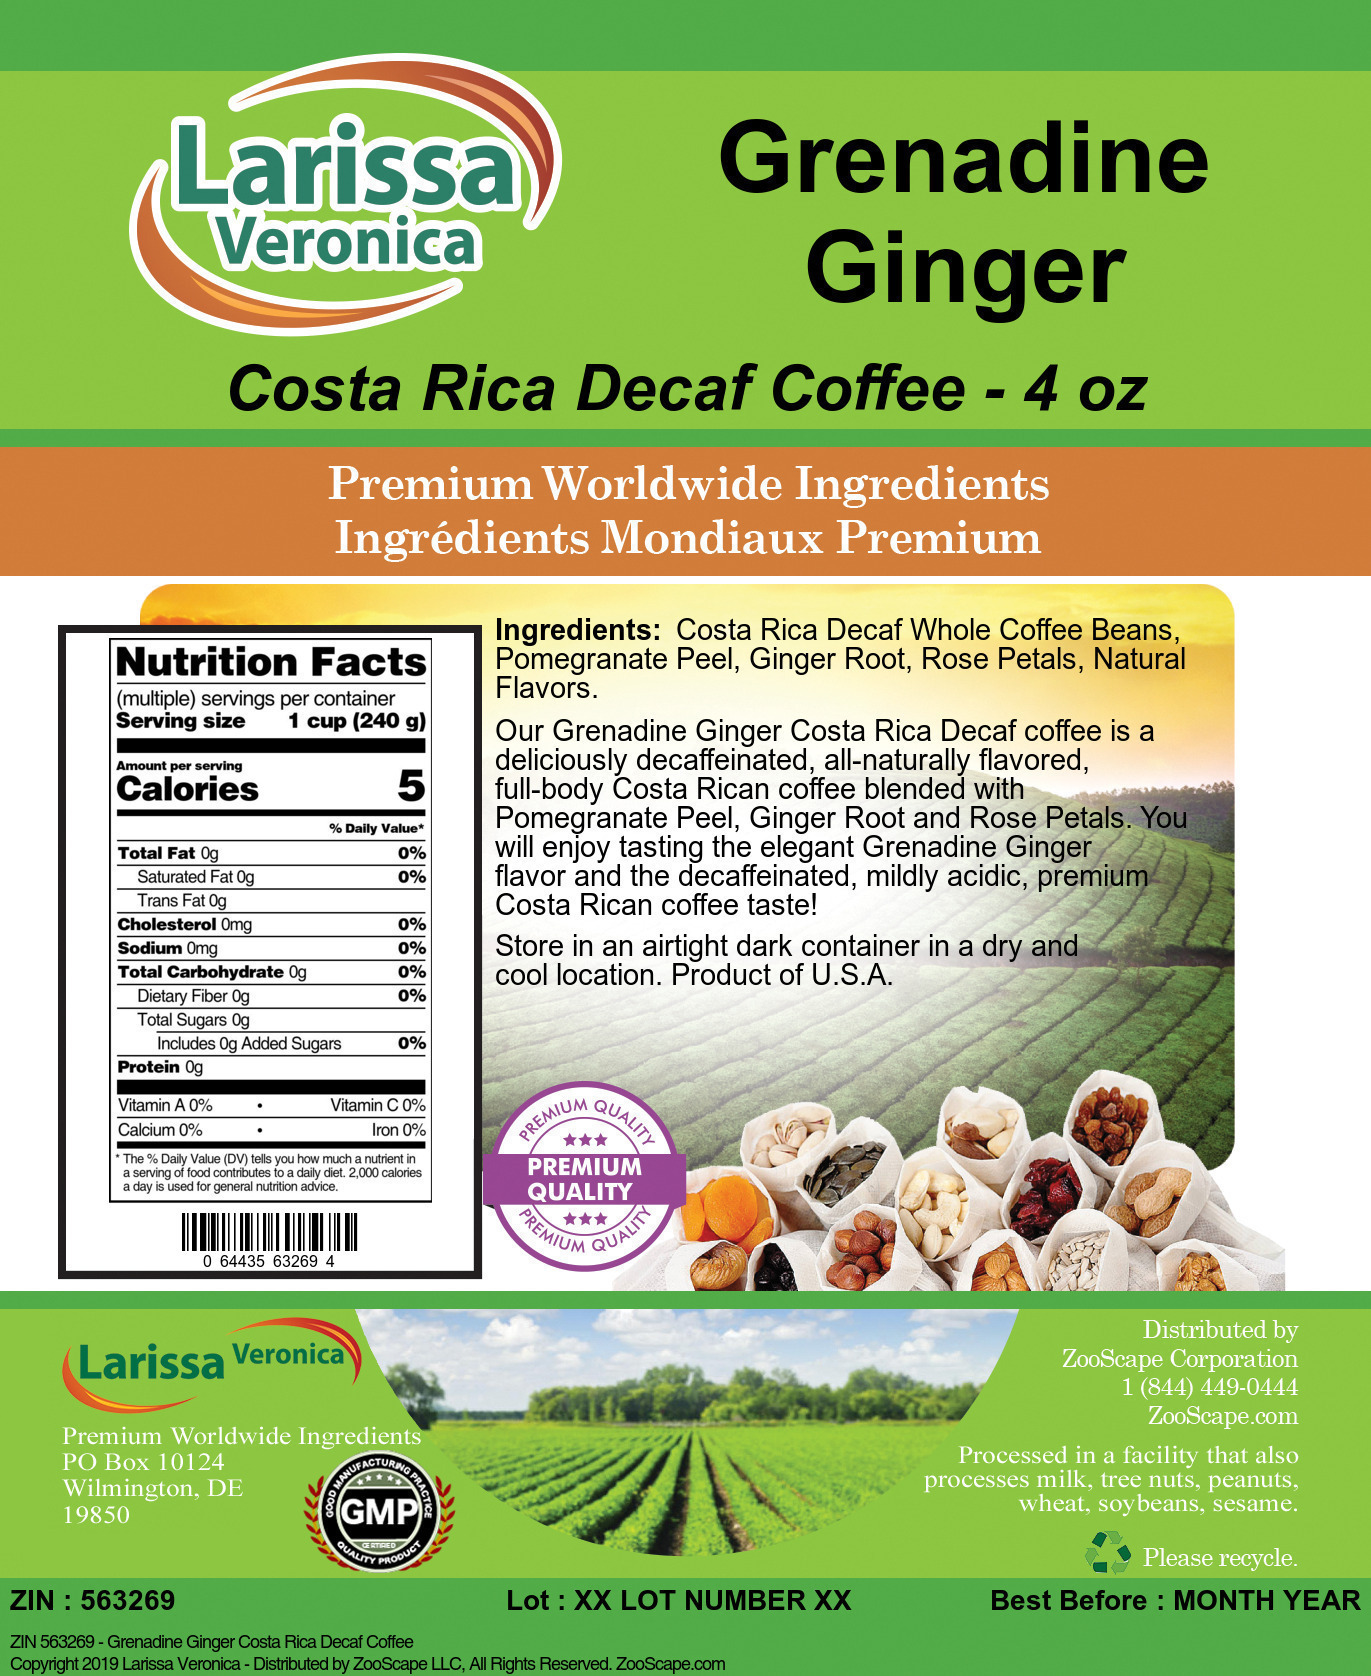 Grenadine Ginger Costa Rica Decaf Coffee - Label